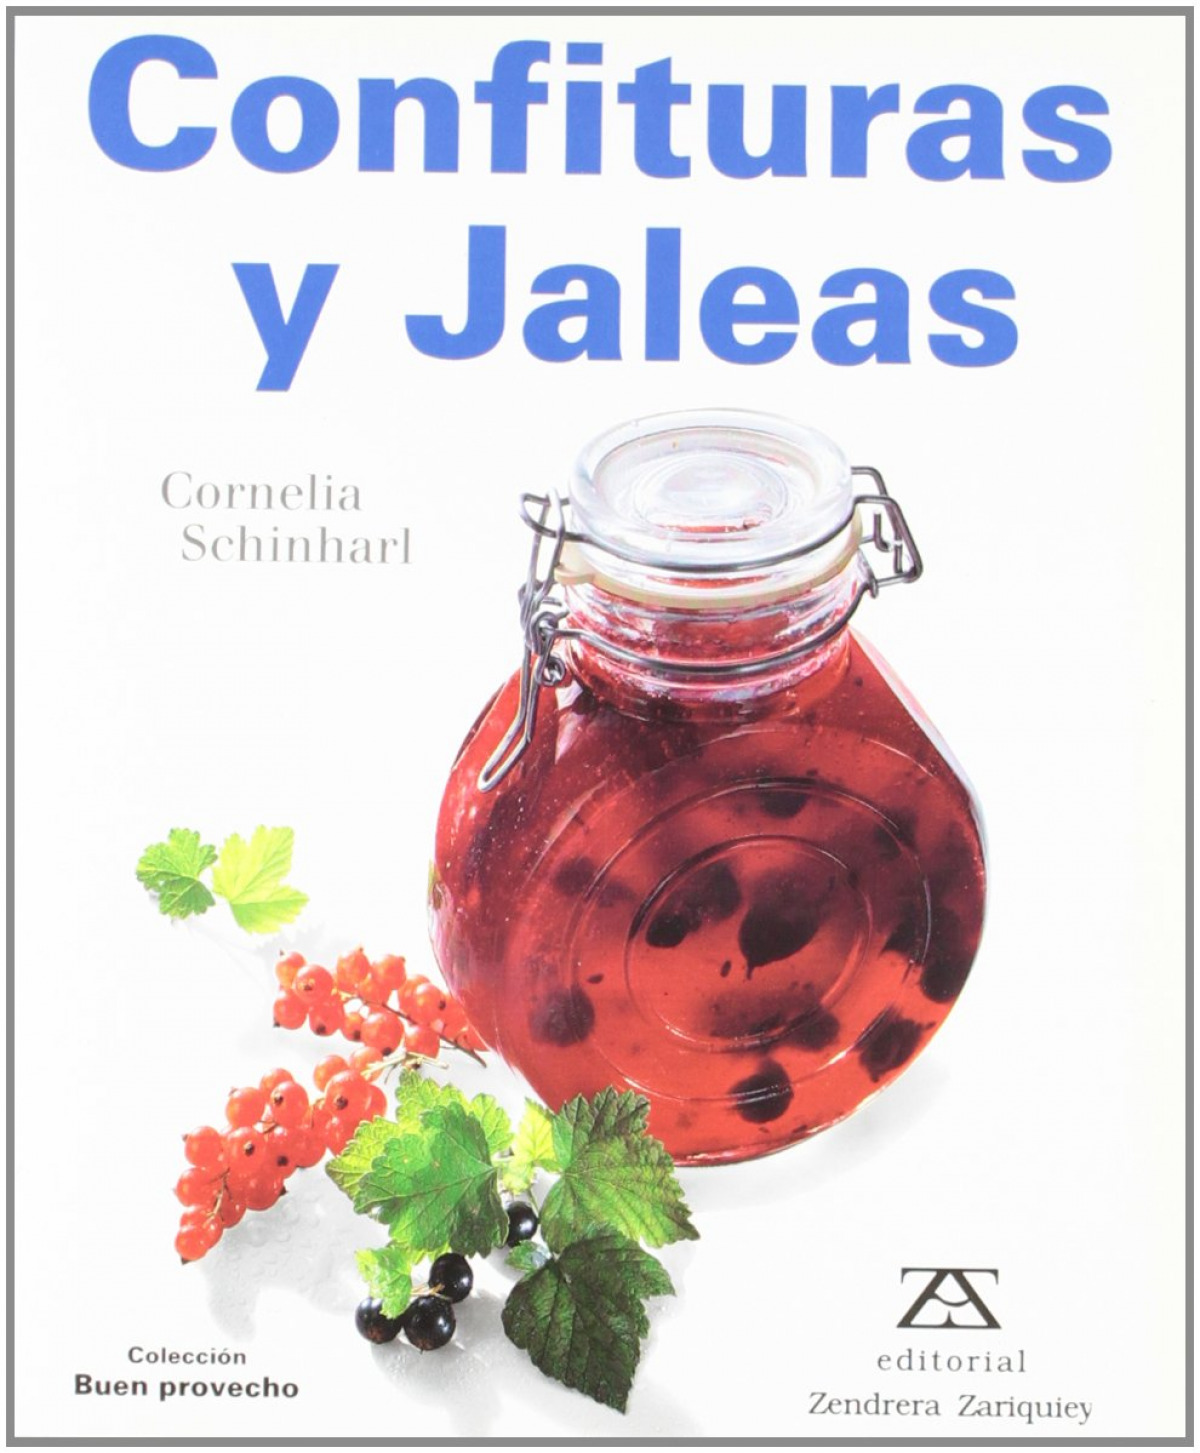 Confituras y jaleas - Schinharl, Cornelia / Fabregat Oliva, María Ángeles